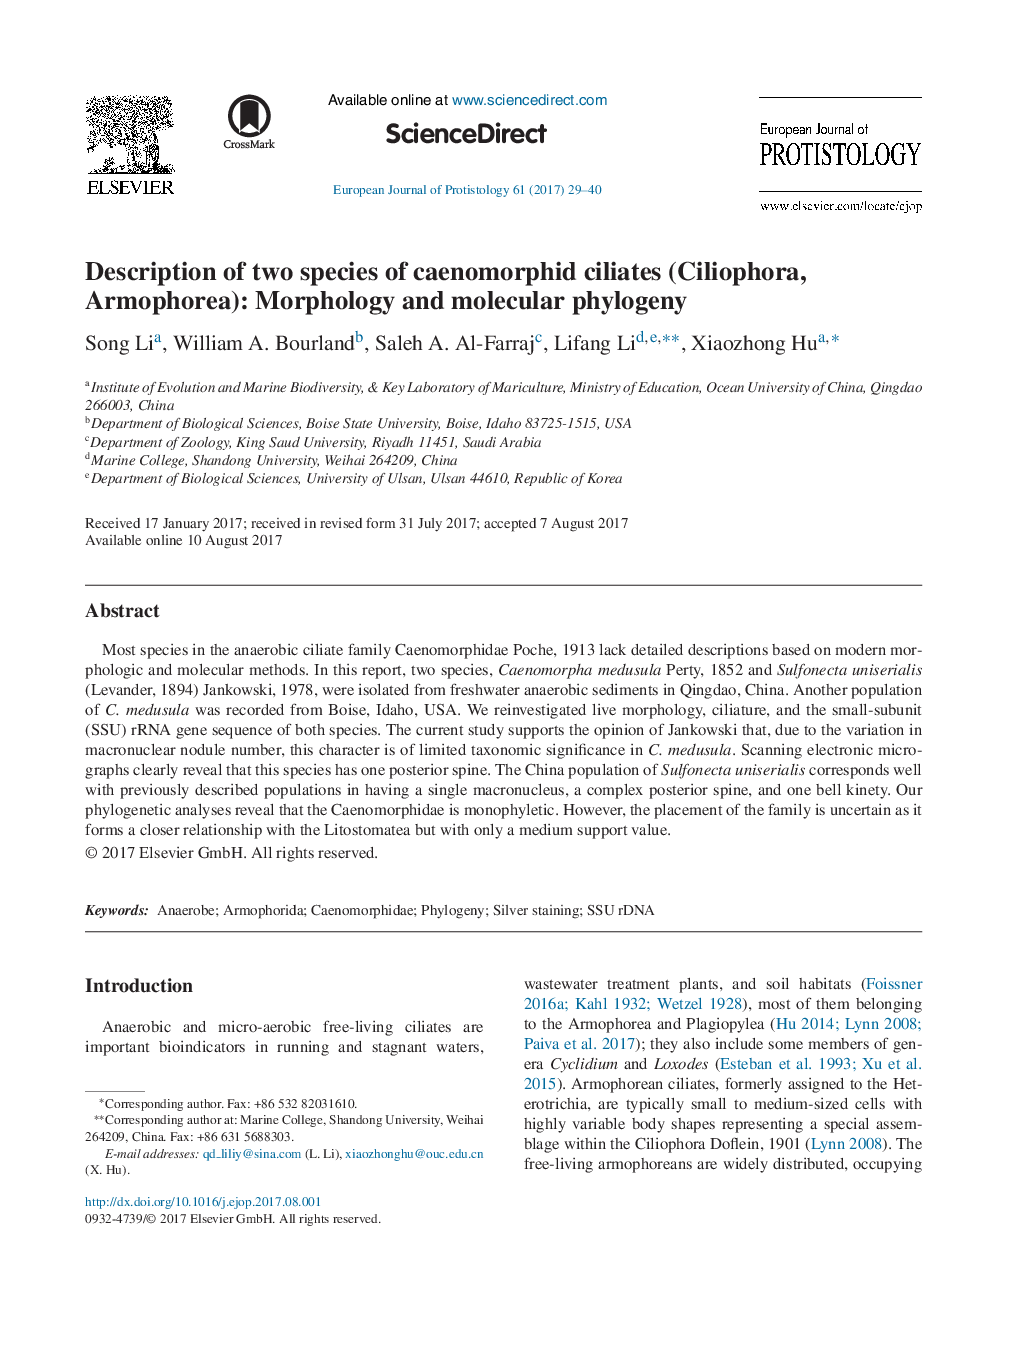 Description of two species of caenomorphid ciliates (Ciliophora, Armophorea): Morphology and molecular phylogeny